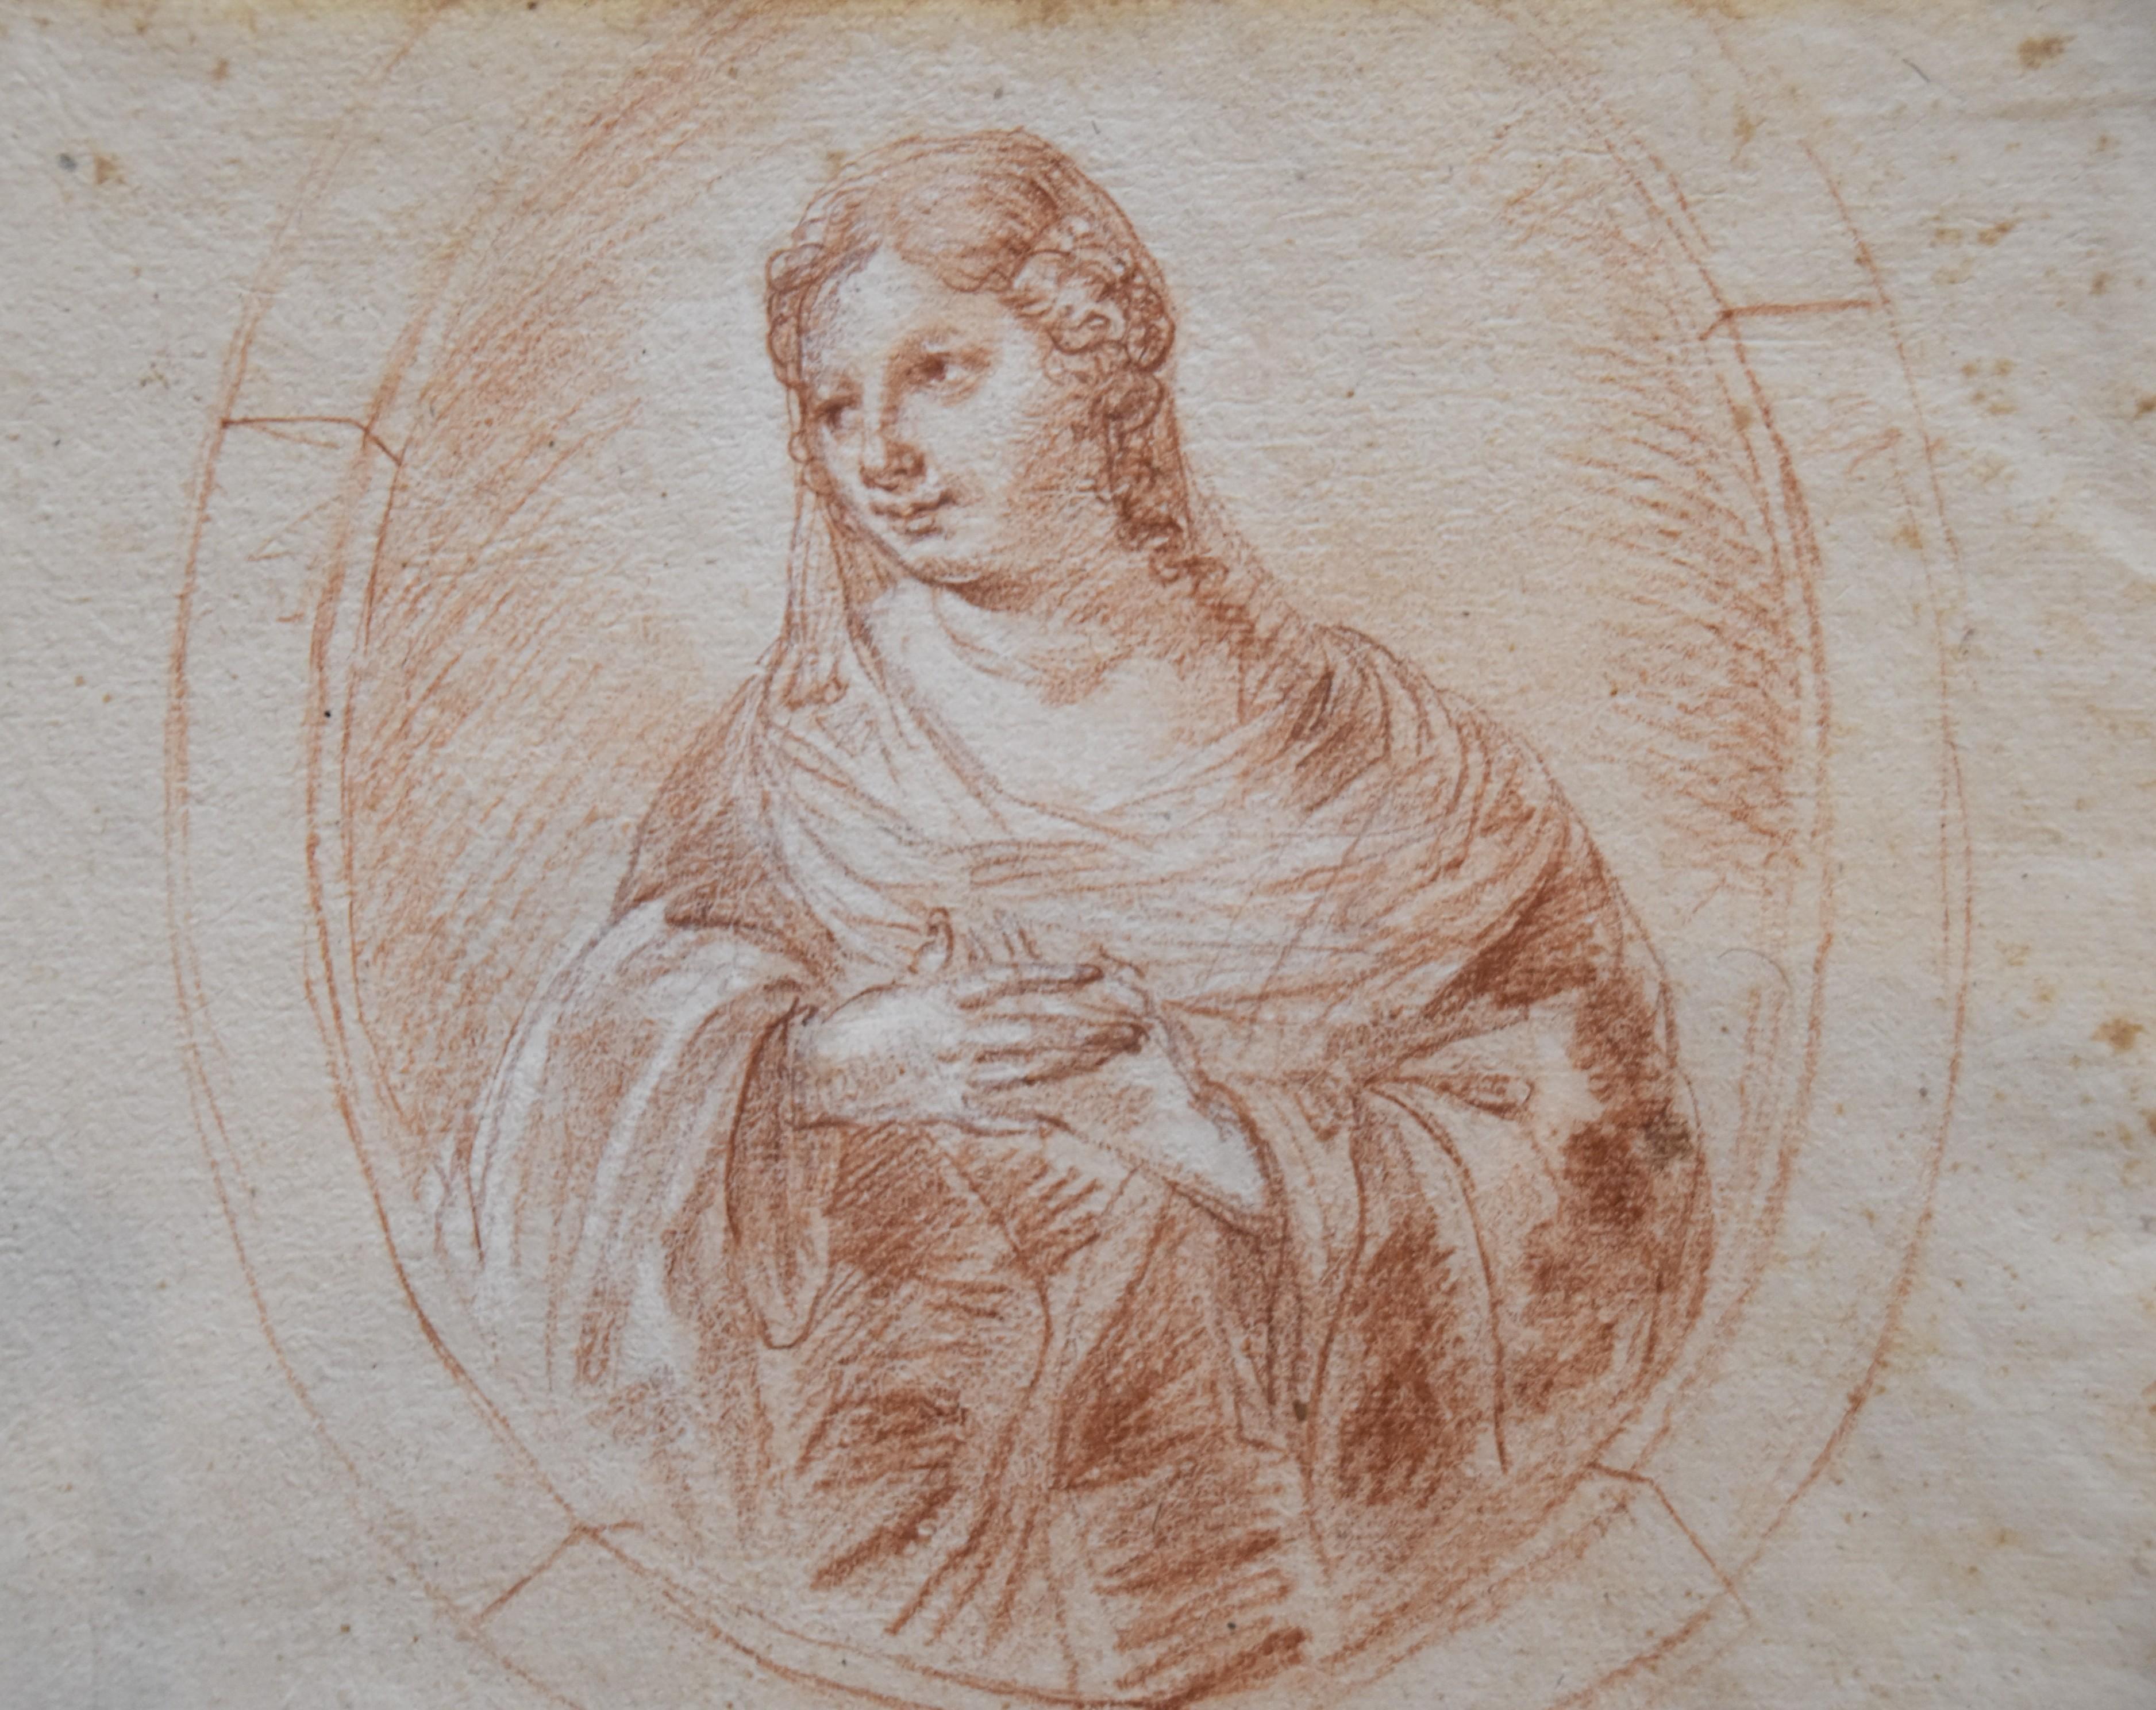 18th century drawings